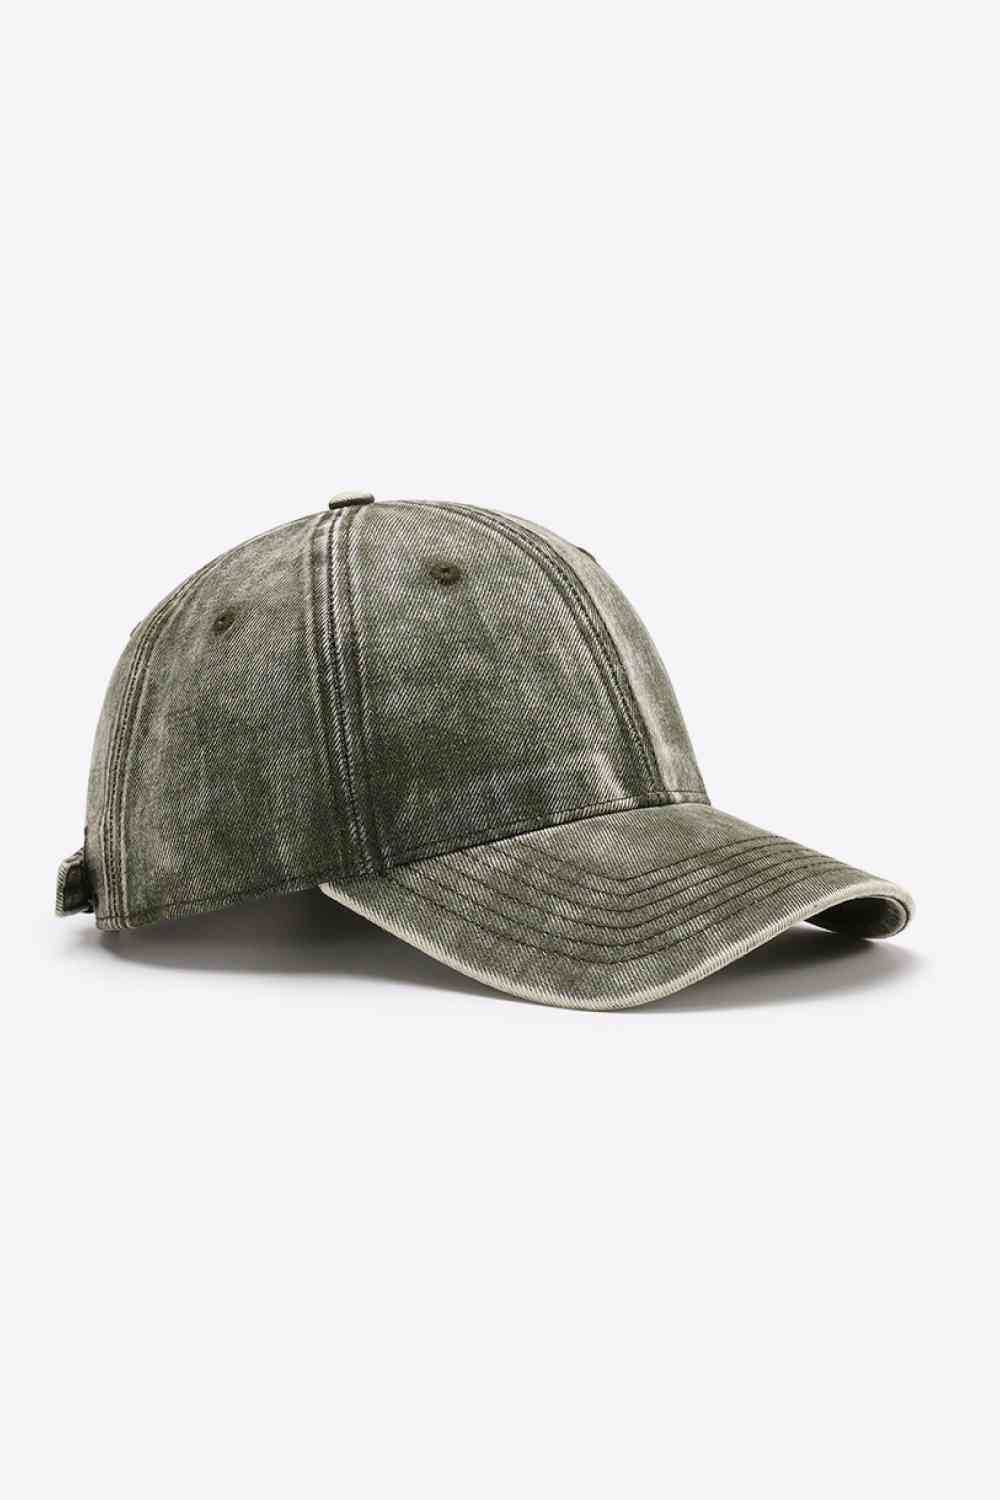 TEEK - Plain Adjustable Baseball Cap HAT TEEK Trend Army Green One Size 